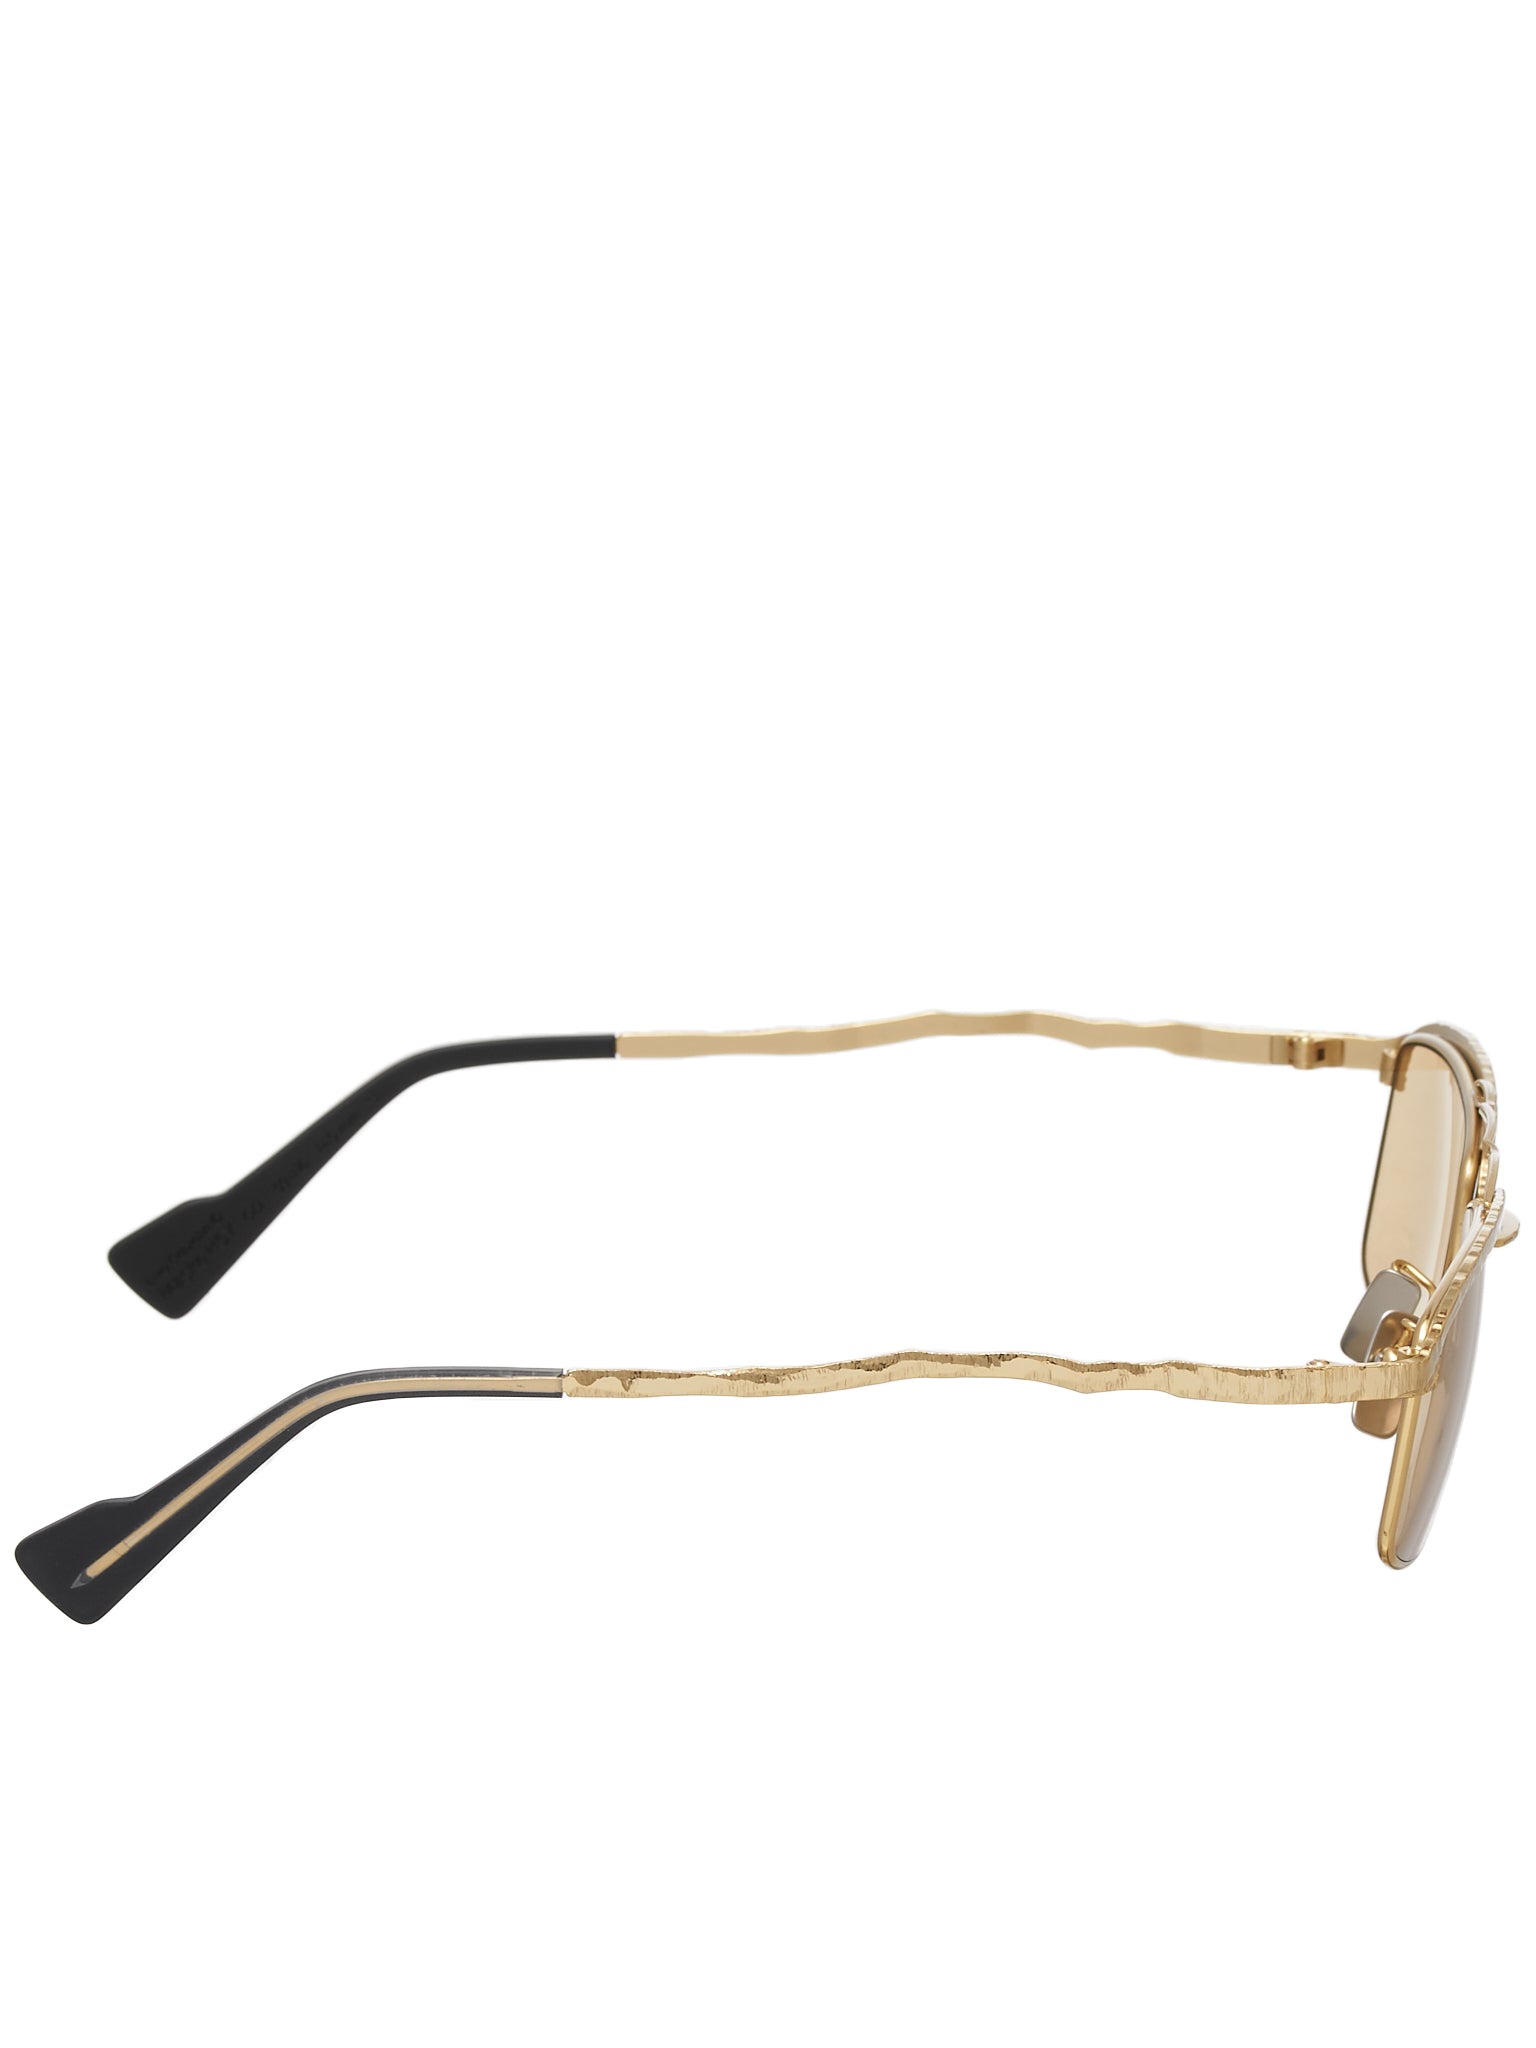 H57 Sunglasses (H57-59-16-GD-GOLD)